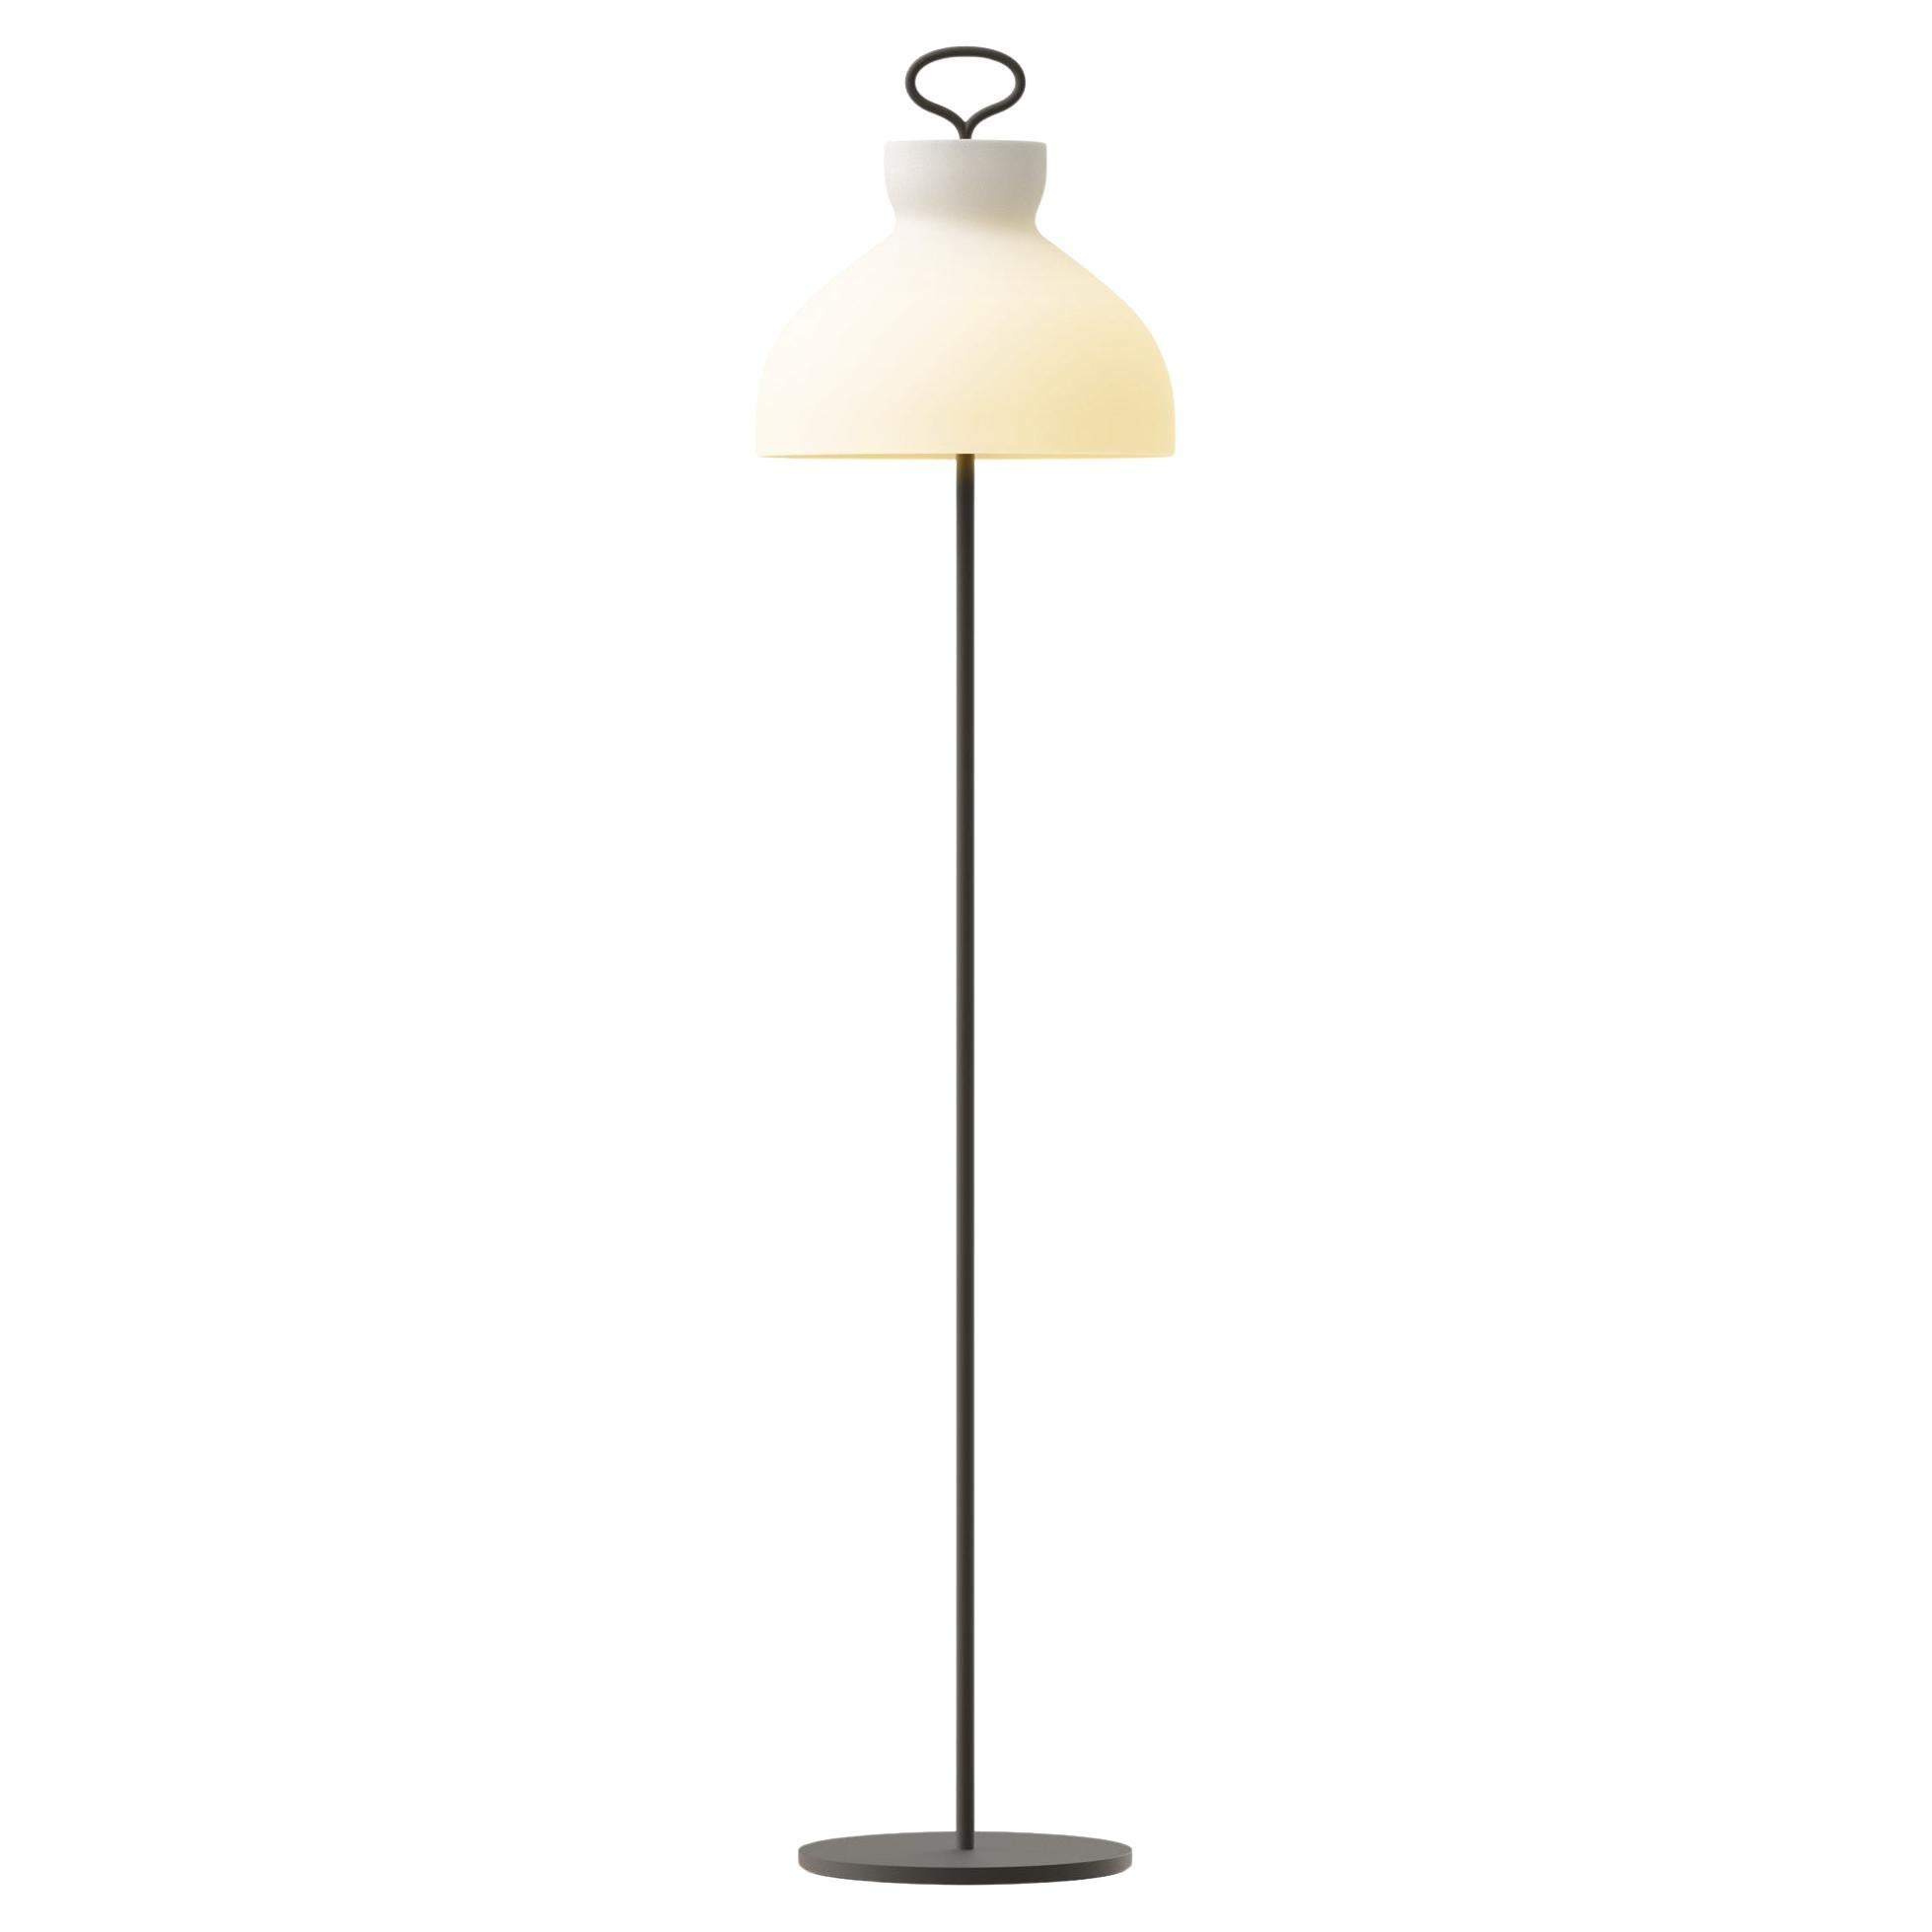 Ignazio Gardella 'Arenzano Terra' Floor Lamp in Bronze and Glass For Sale